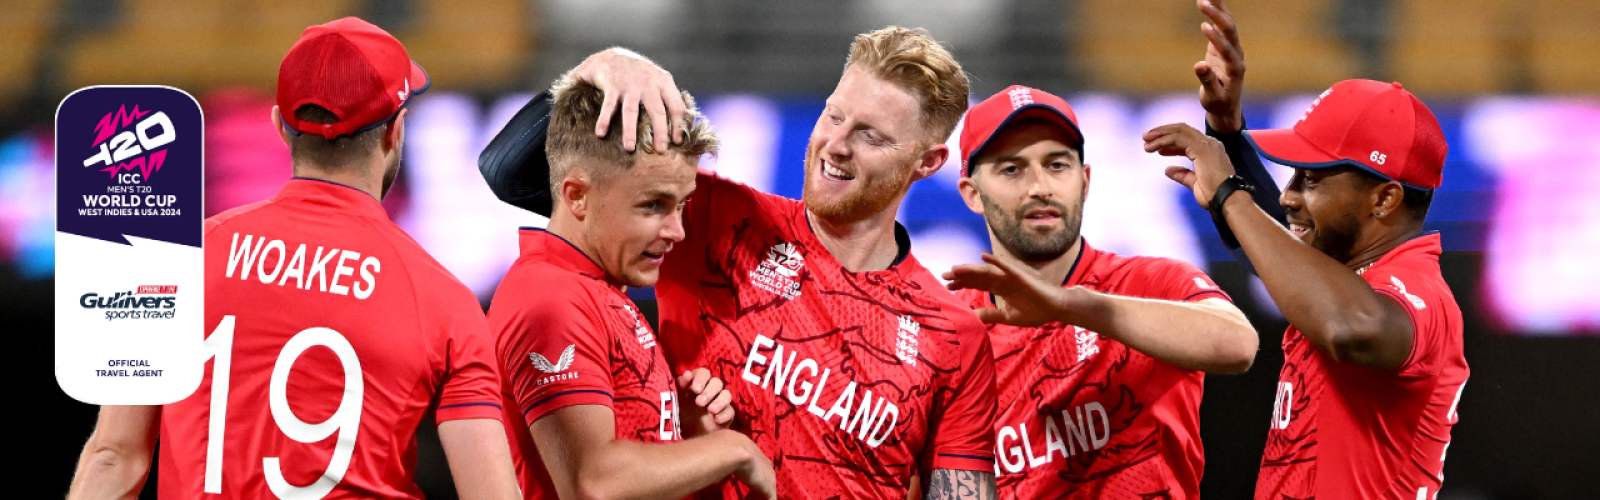 England cricket team celebrating 